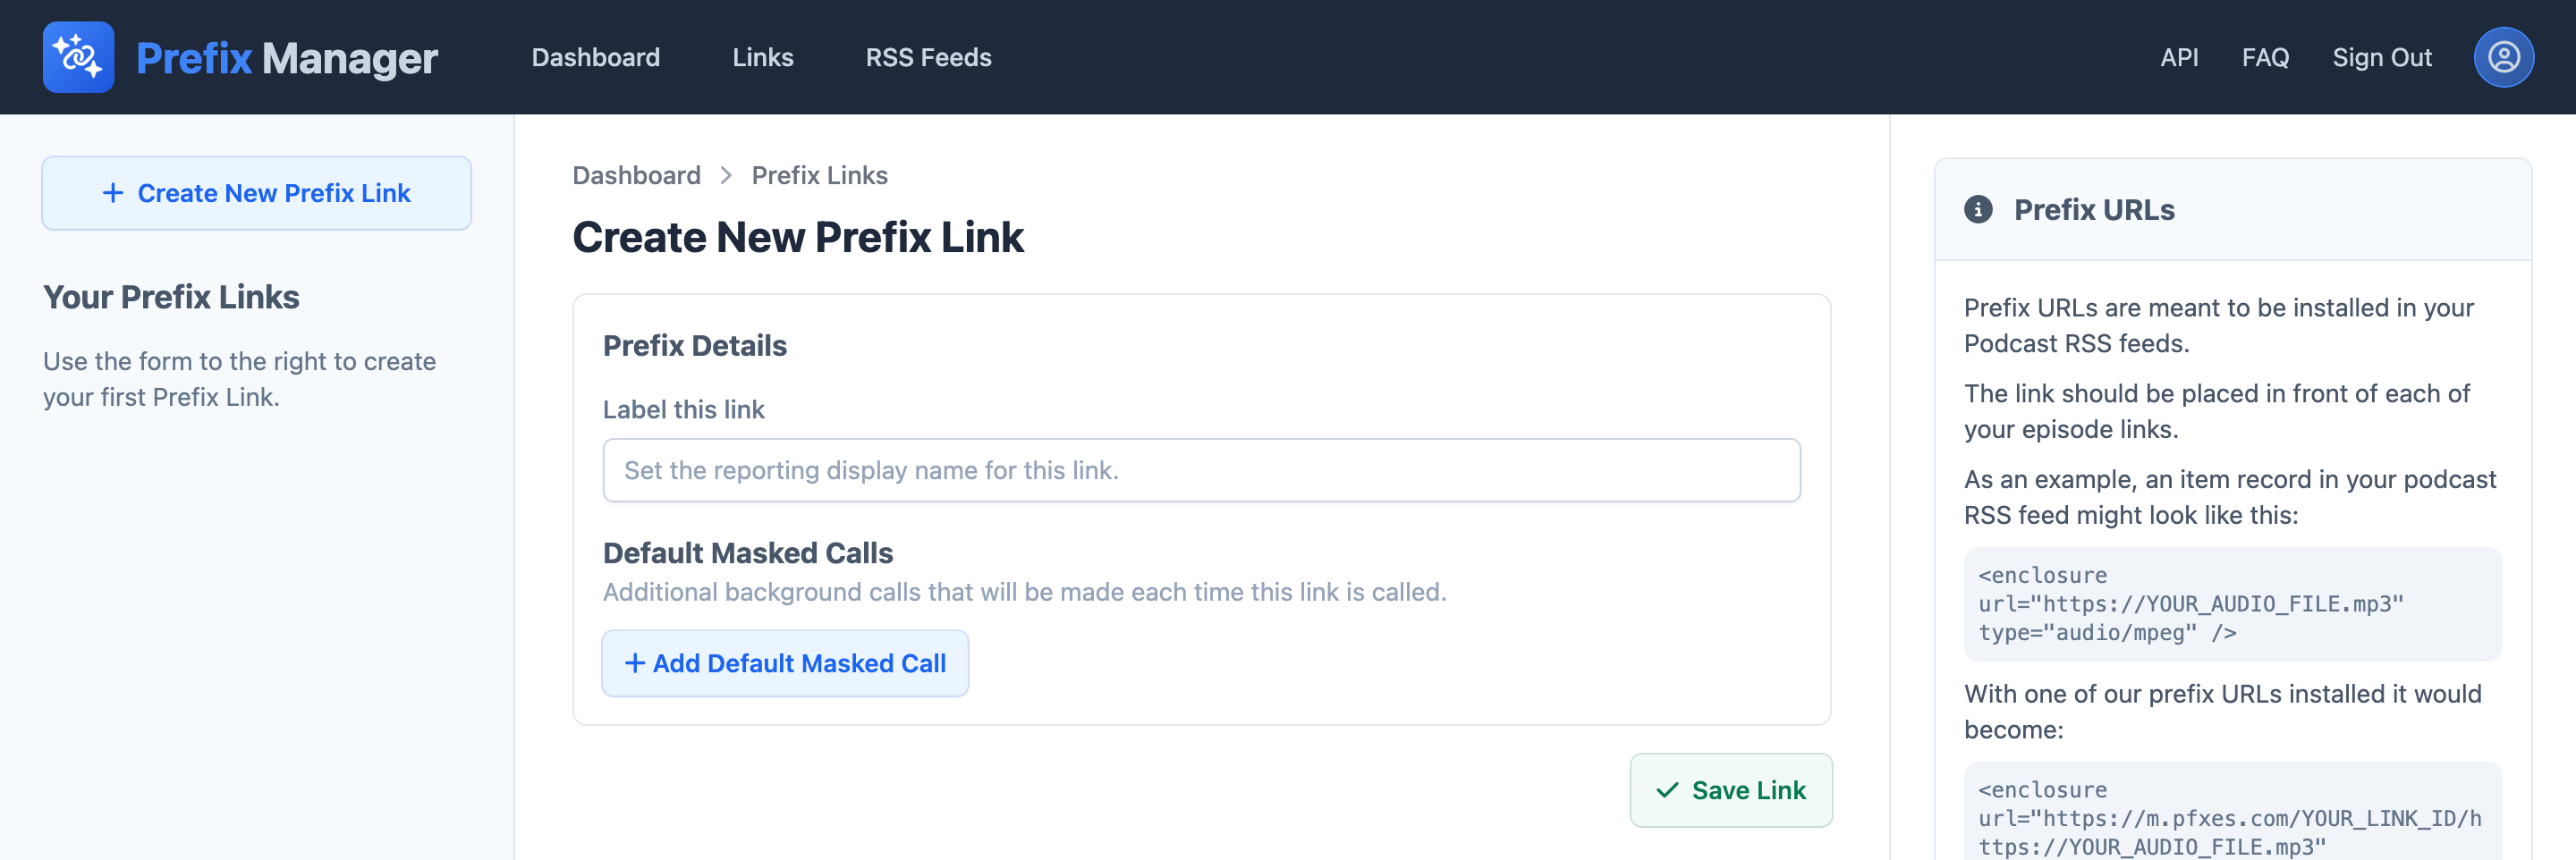 Create a New Prefix Link